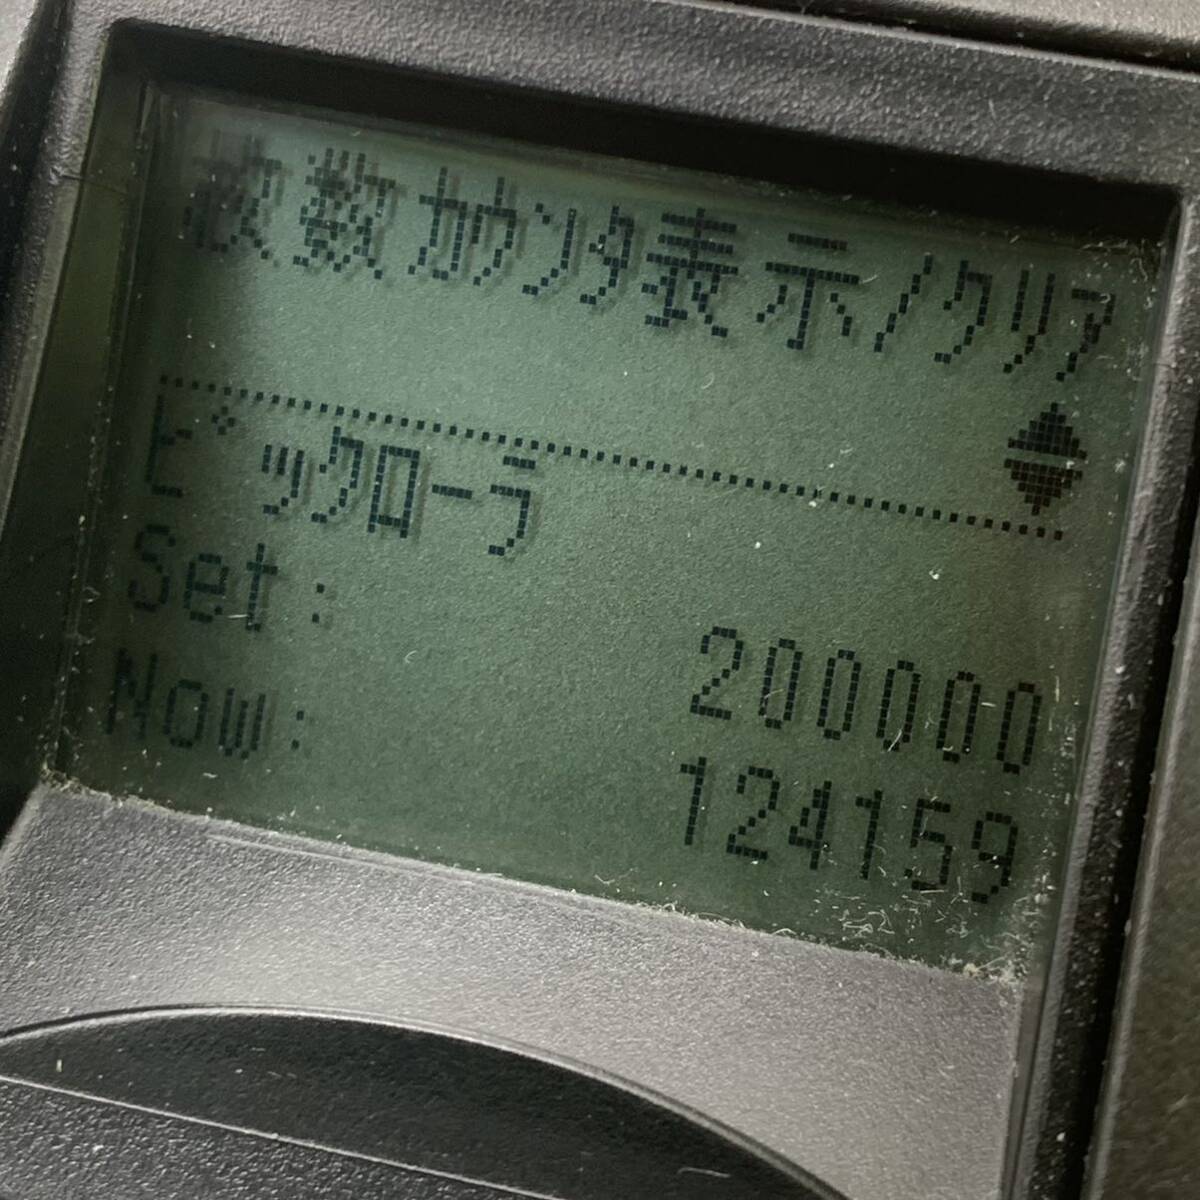 *B1001* total scan 124159 sheets FUJITSU image Scanner FI-7160B Fujitsu used 2016 year made scanner 